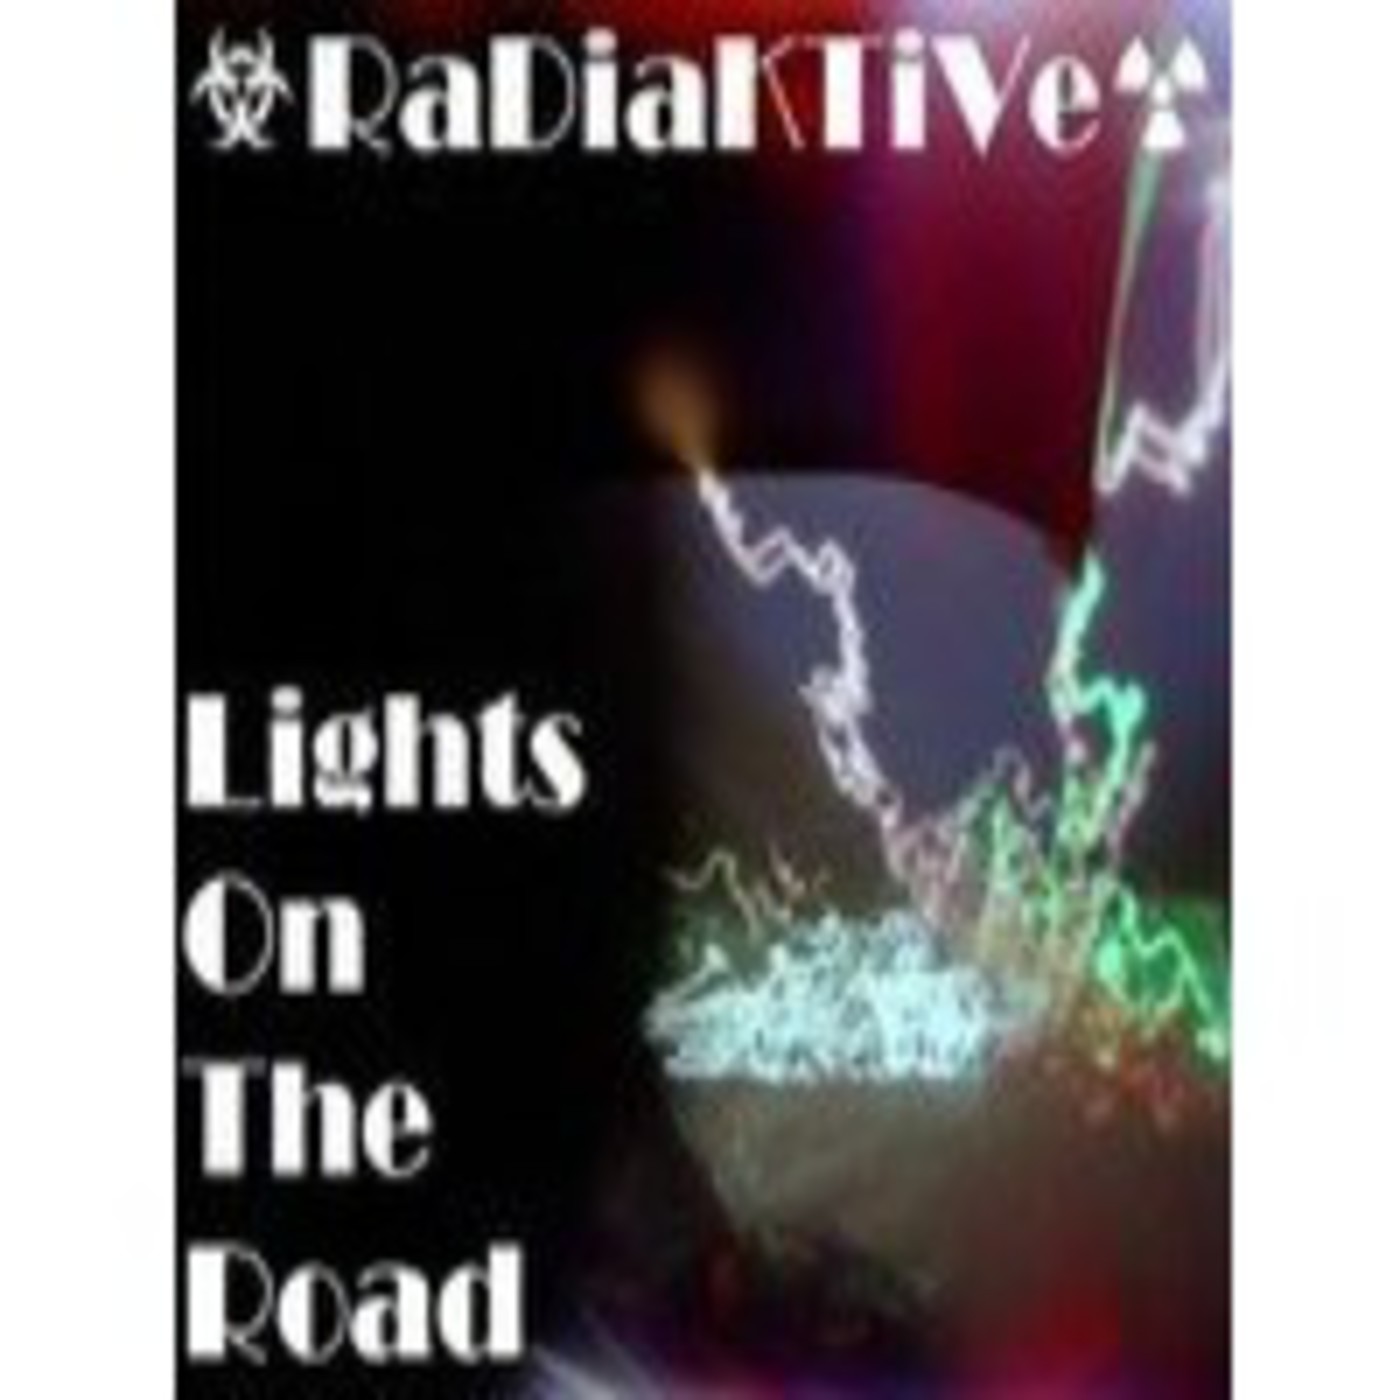 ?RaDiaKTiVe? Lights On The Road (Original Mix)